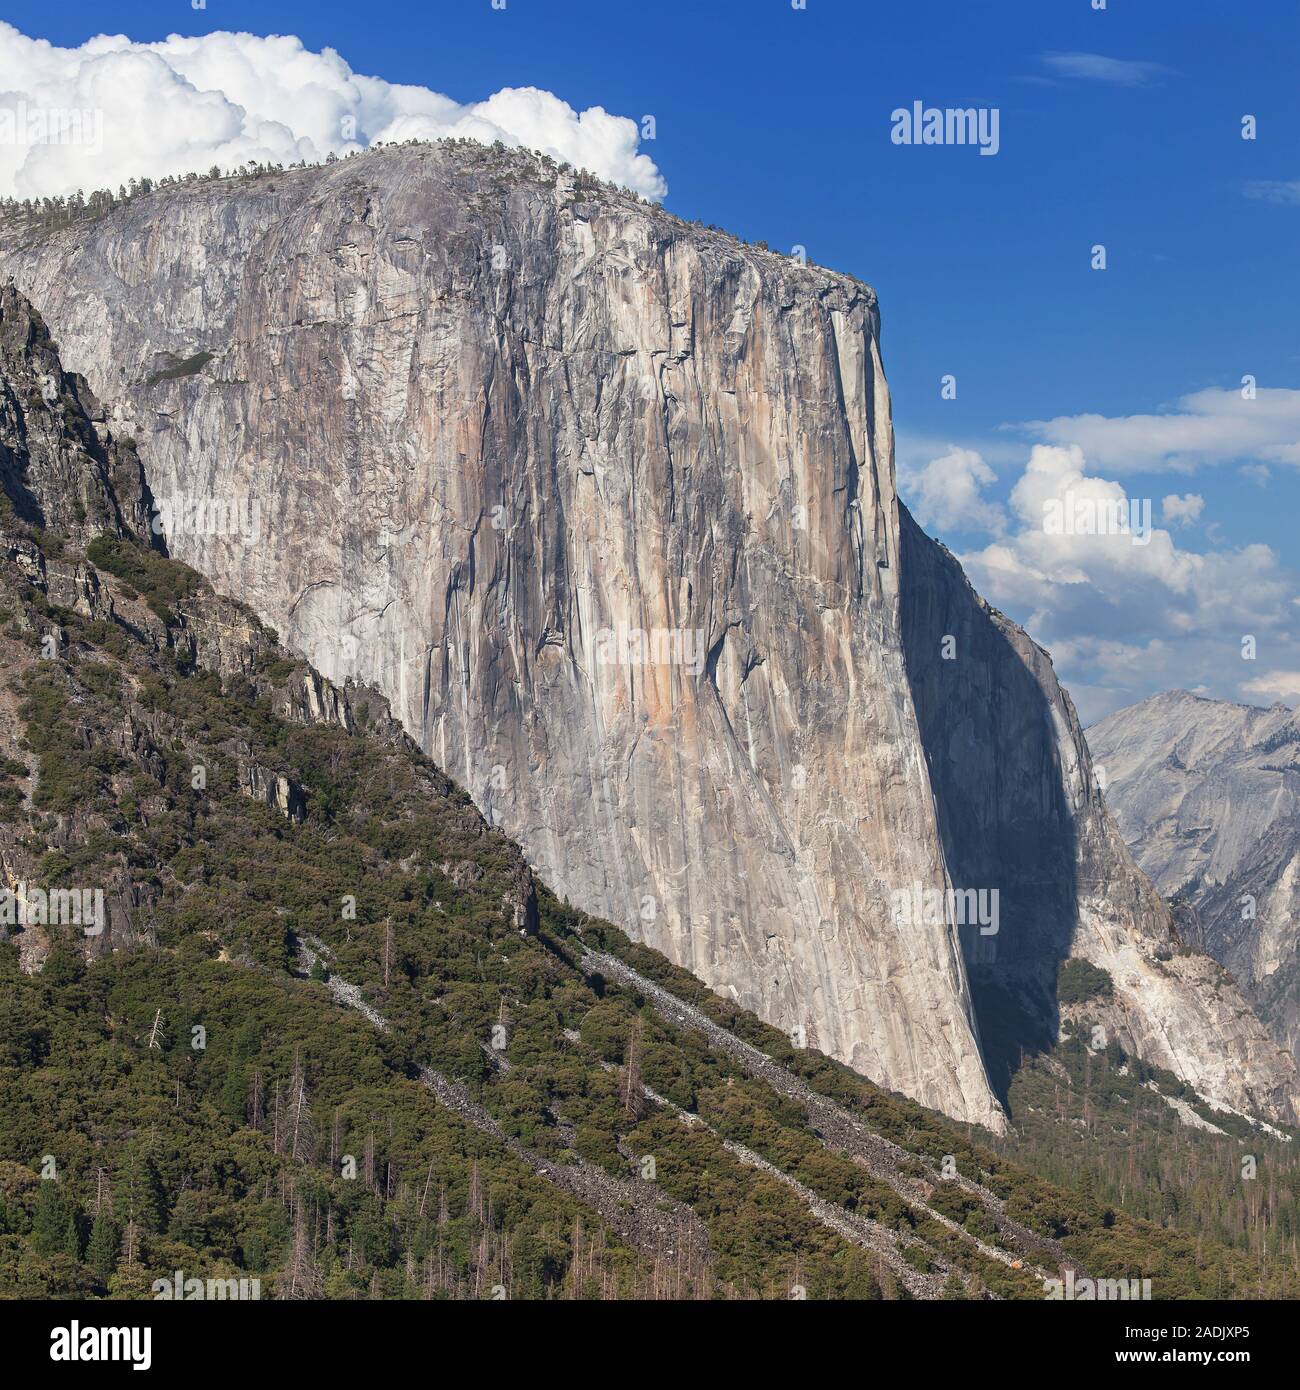 El Capitan de vue de tunnel à partir de la vue de Tunnel, Yosemite National Park, California, USA. Banque D'Images